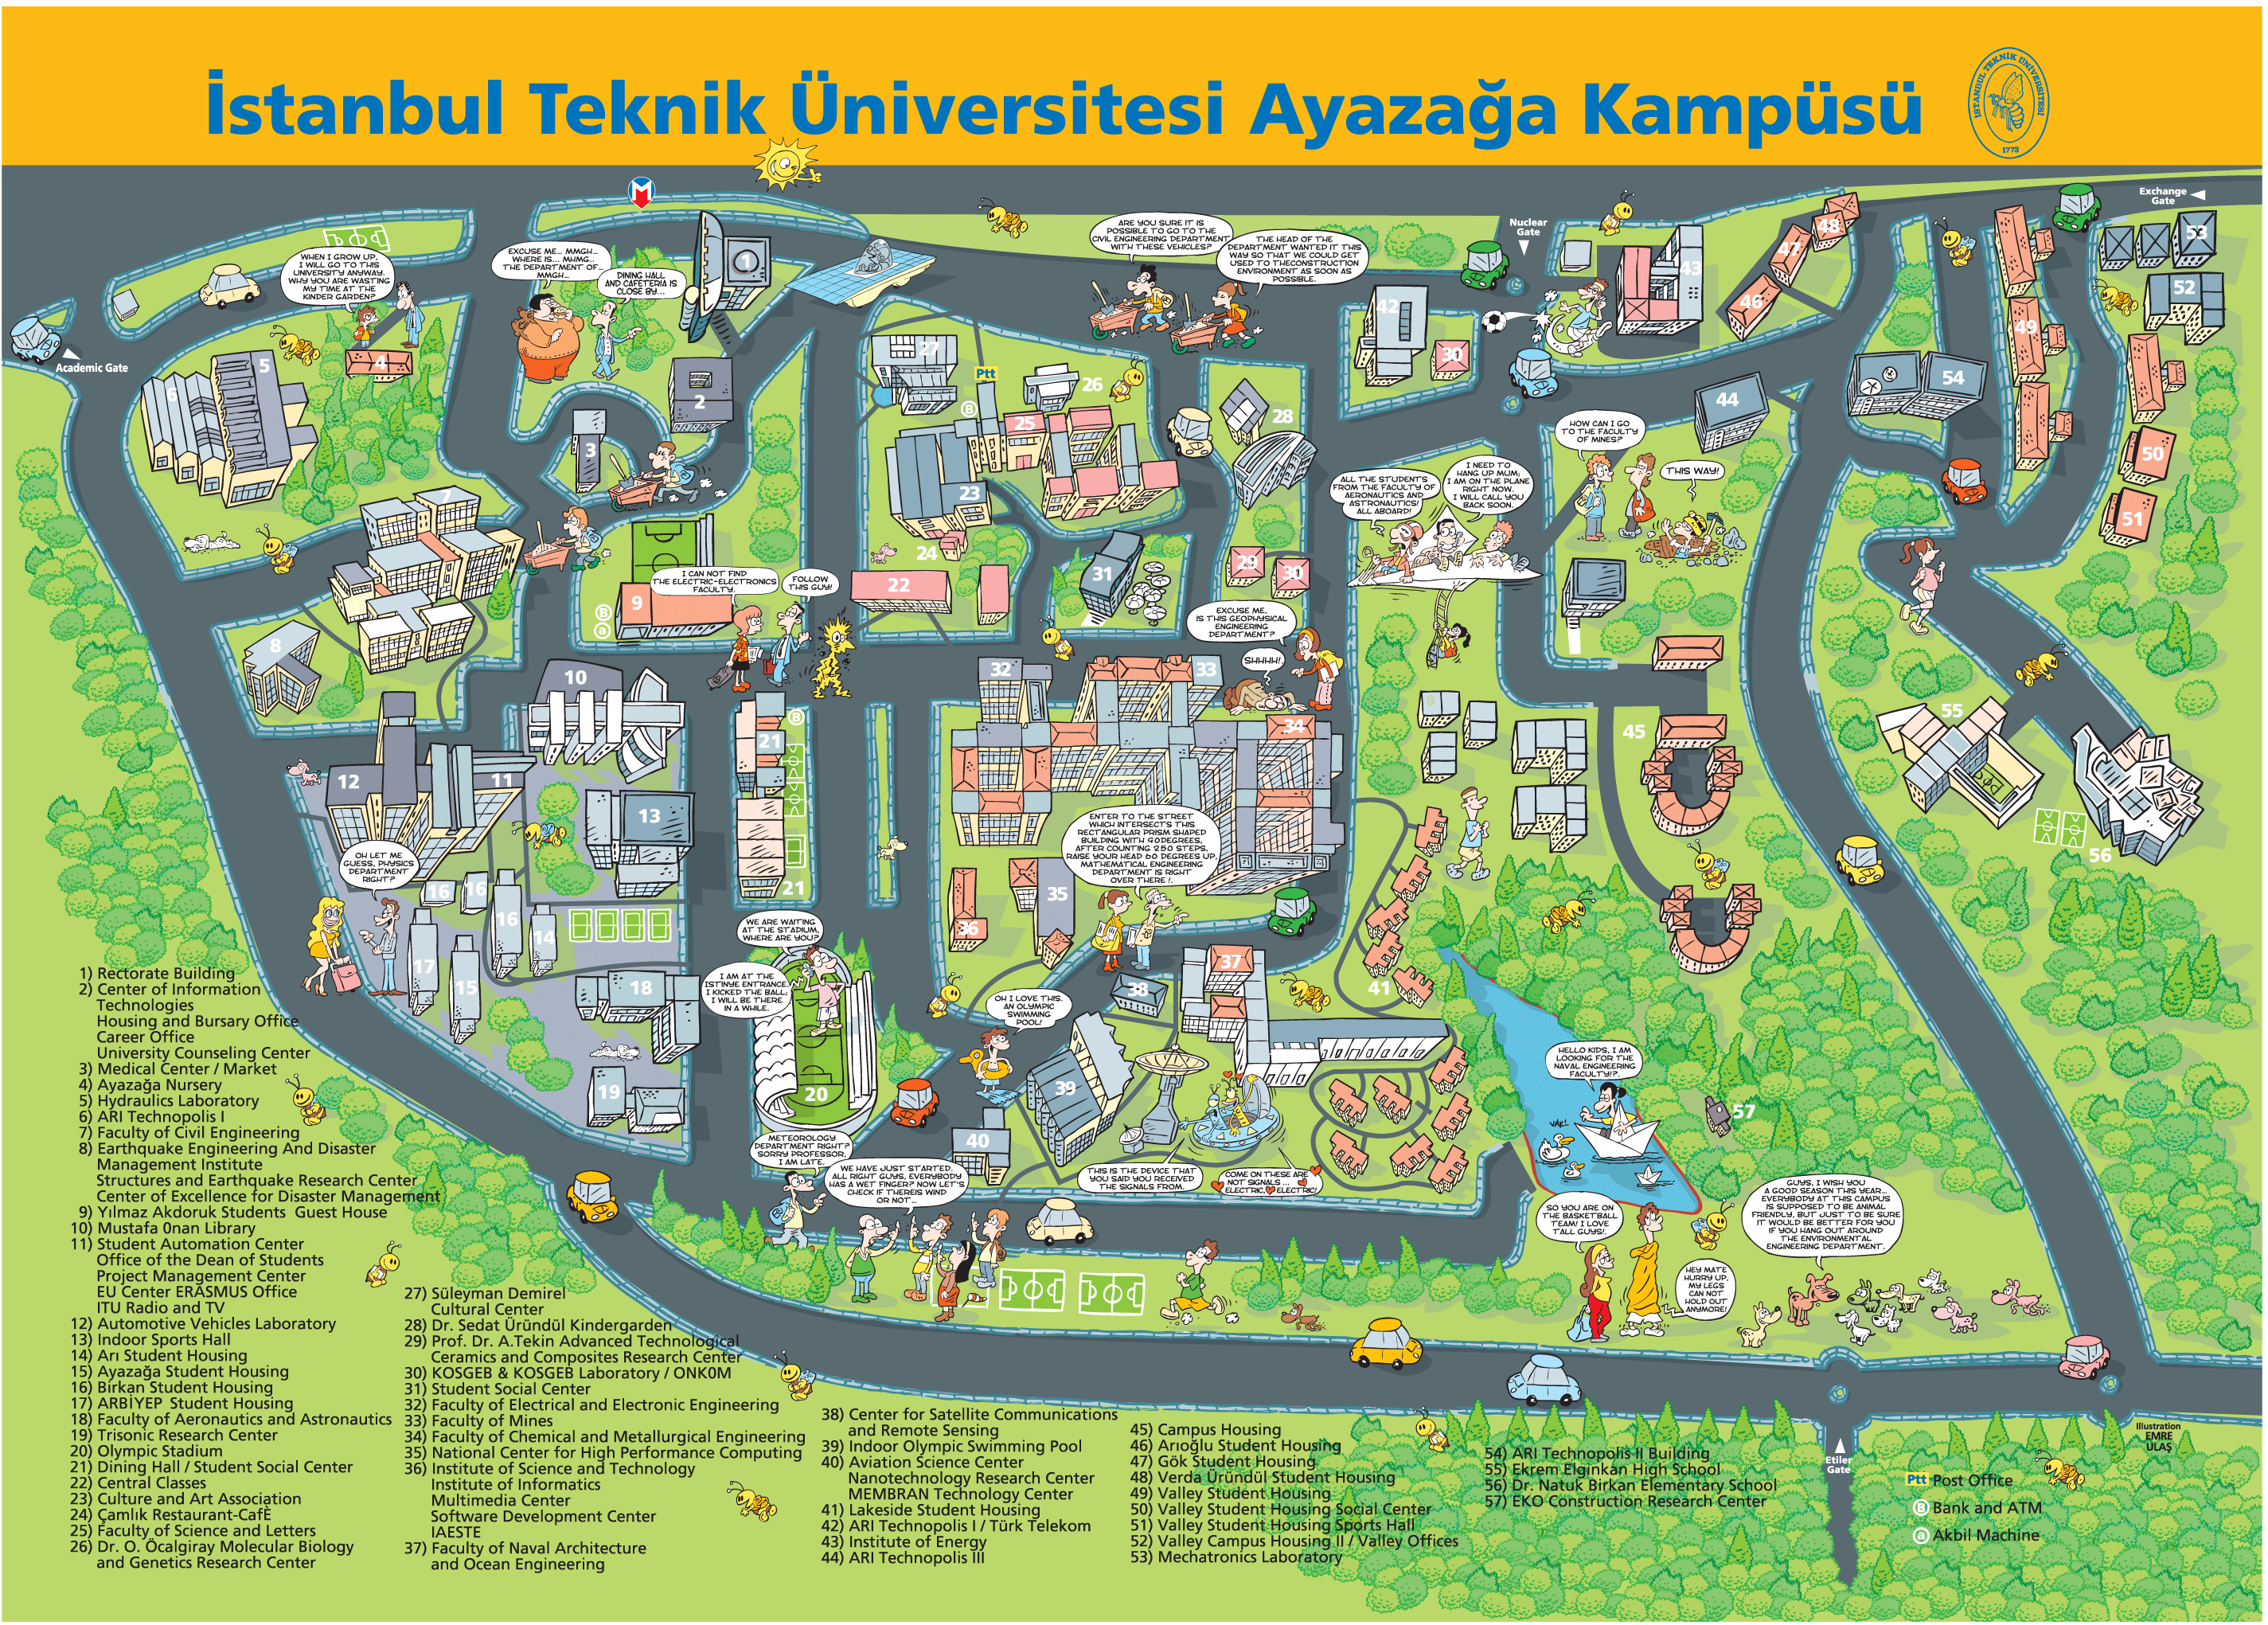 istanbul techical university İTÜ ayazaga maslak campus map - İTUuml